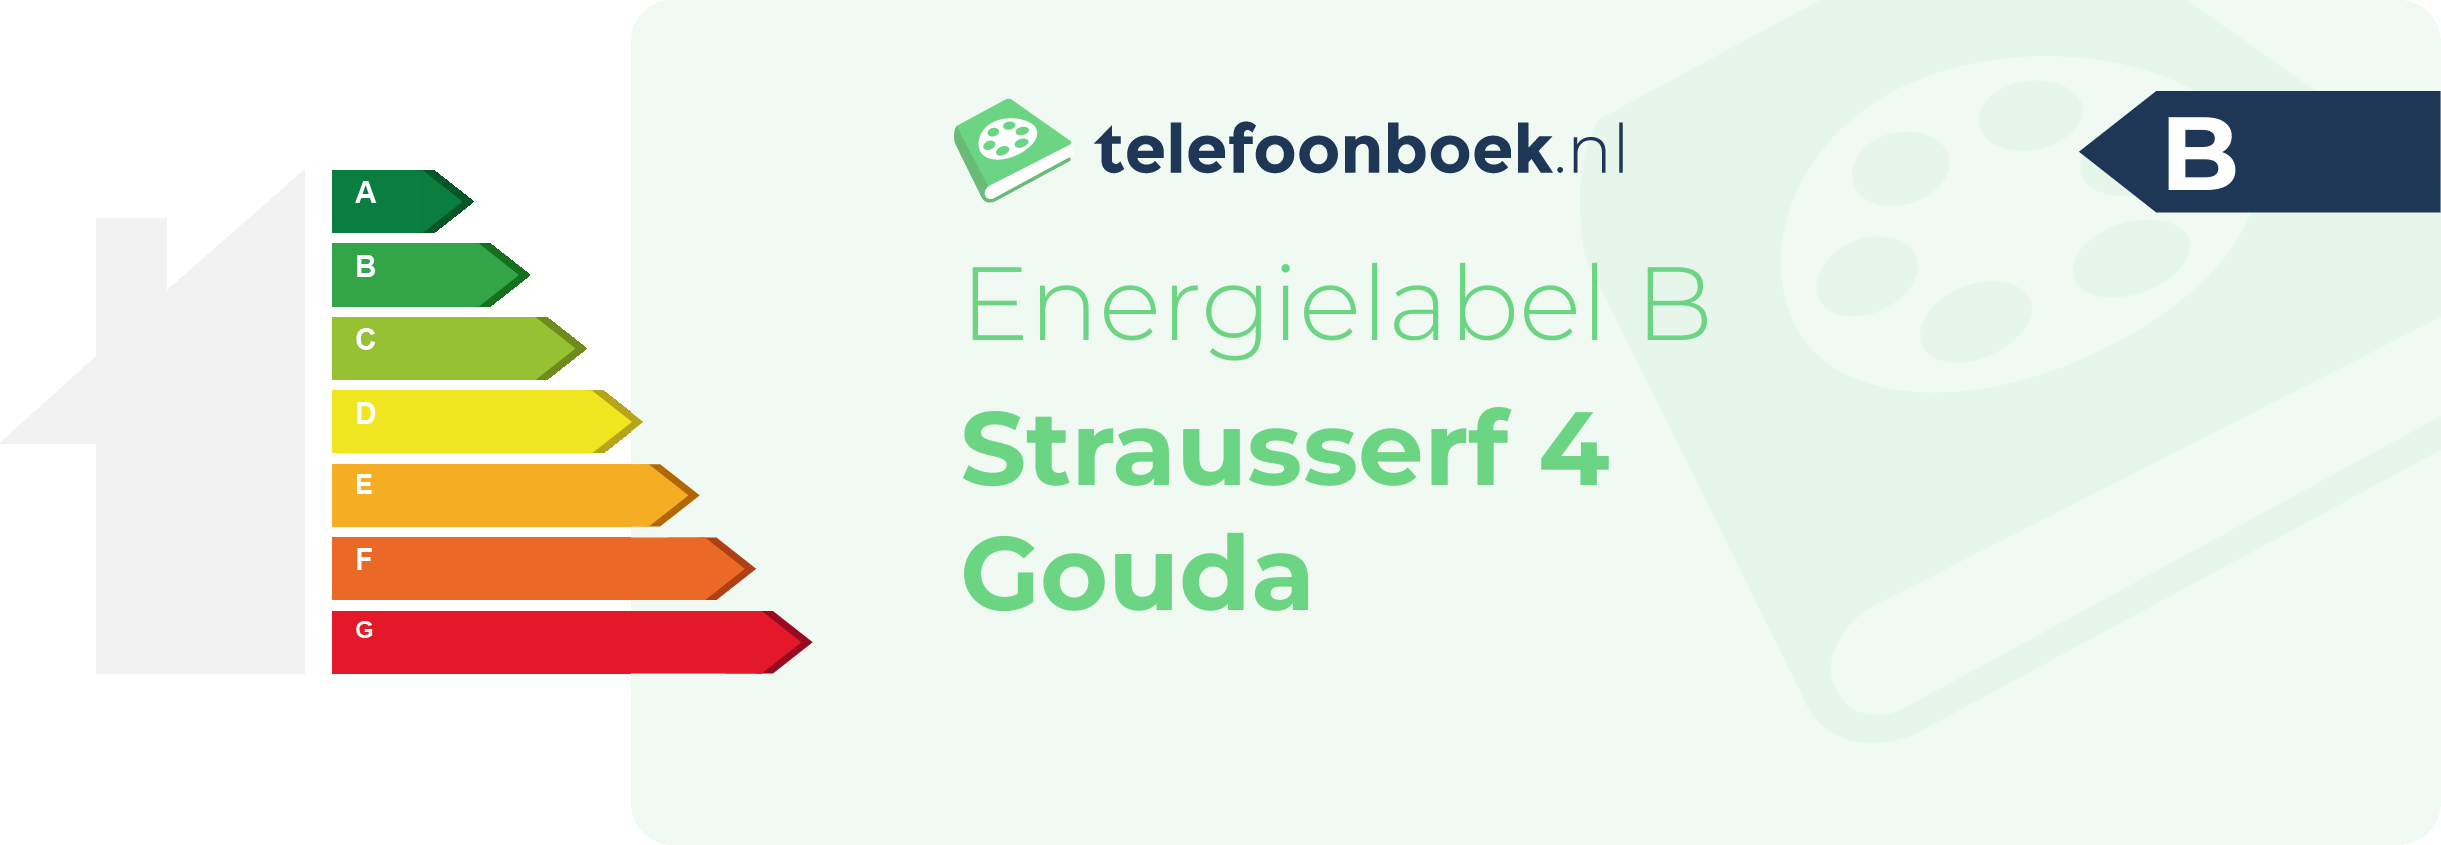 Energielabel Strausserf 4 Gouda